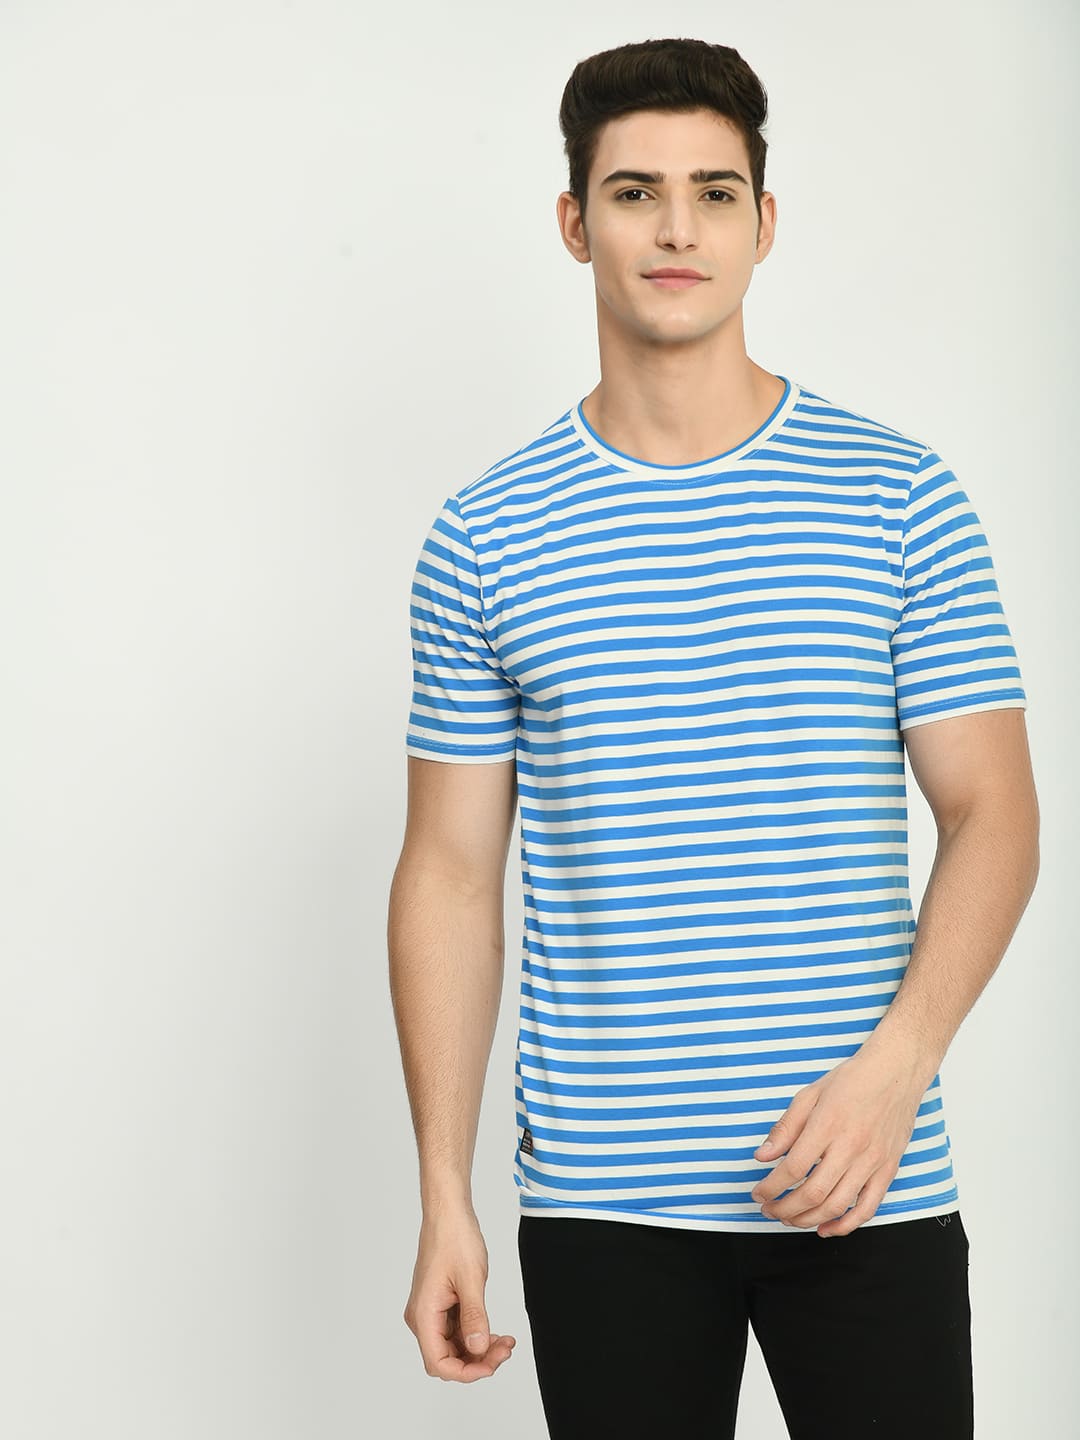 Men's Blue White Striped Knitted T-Shirt